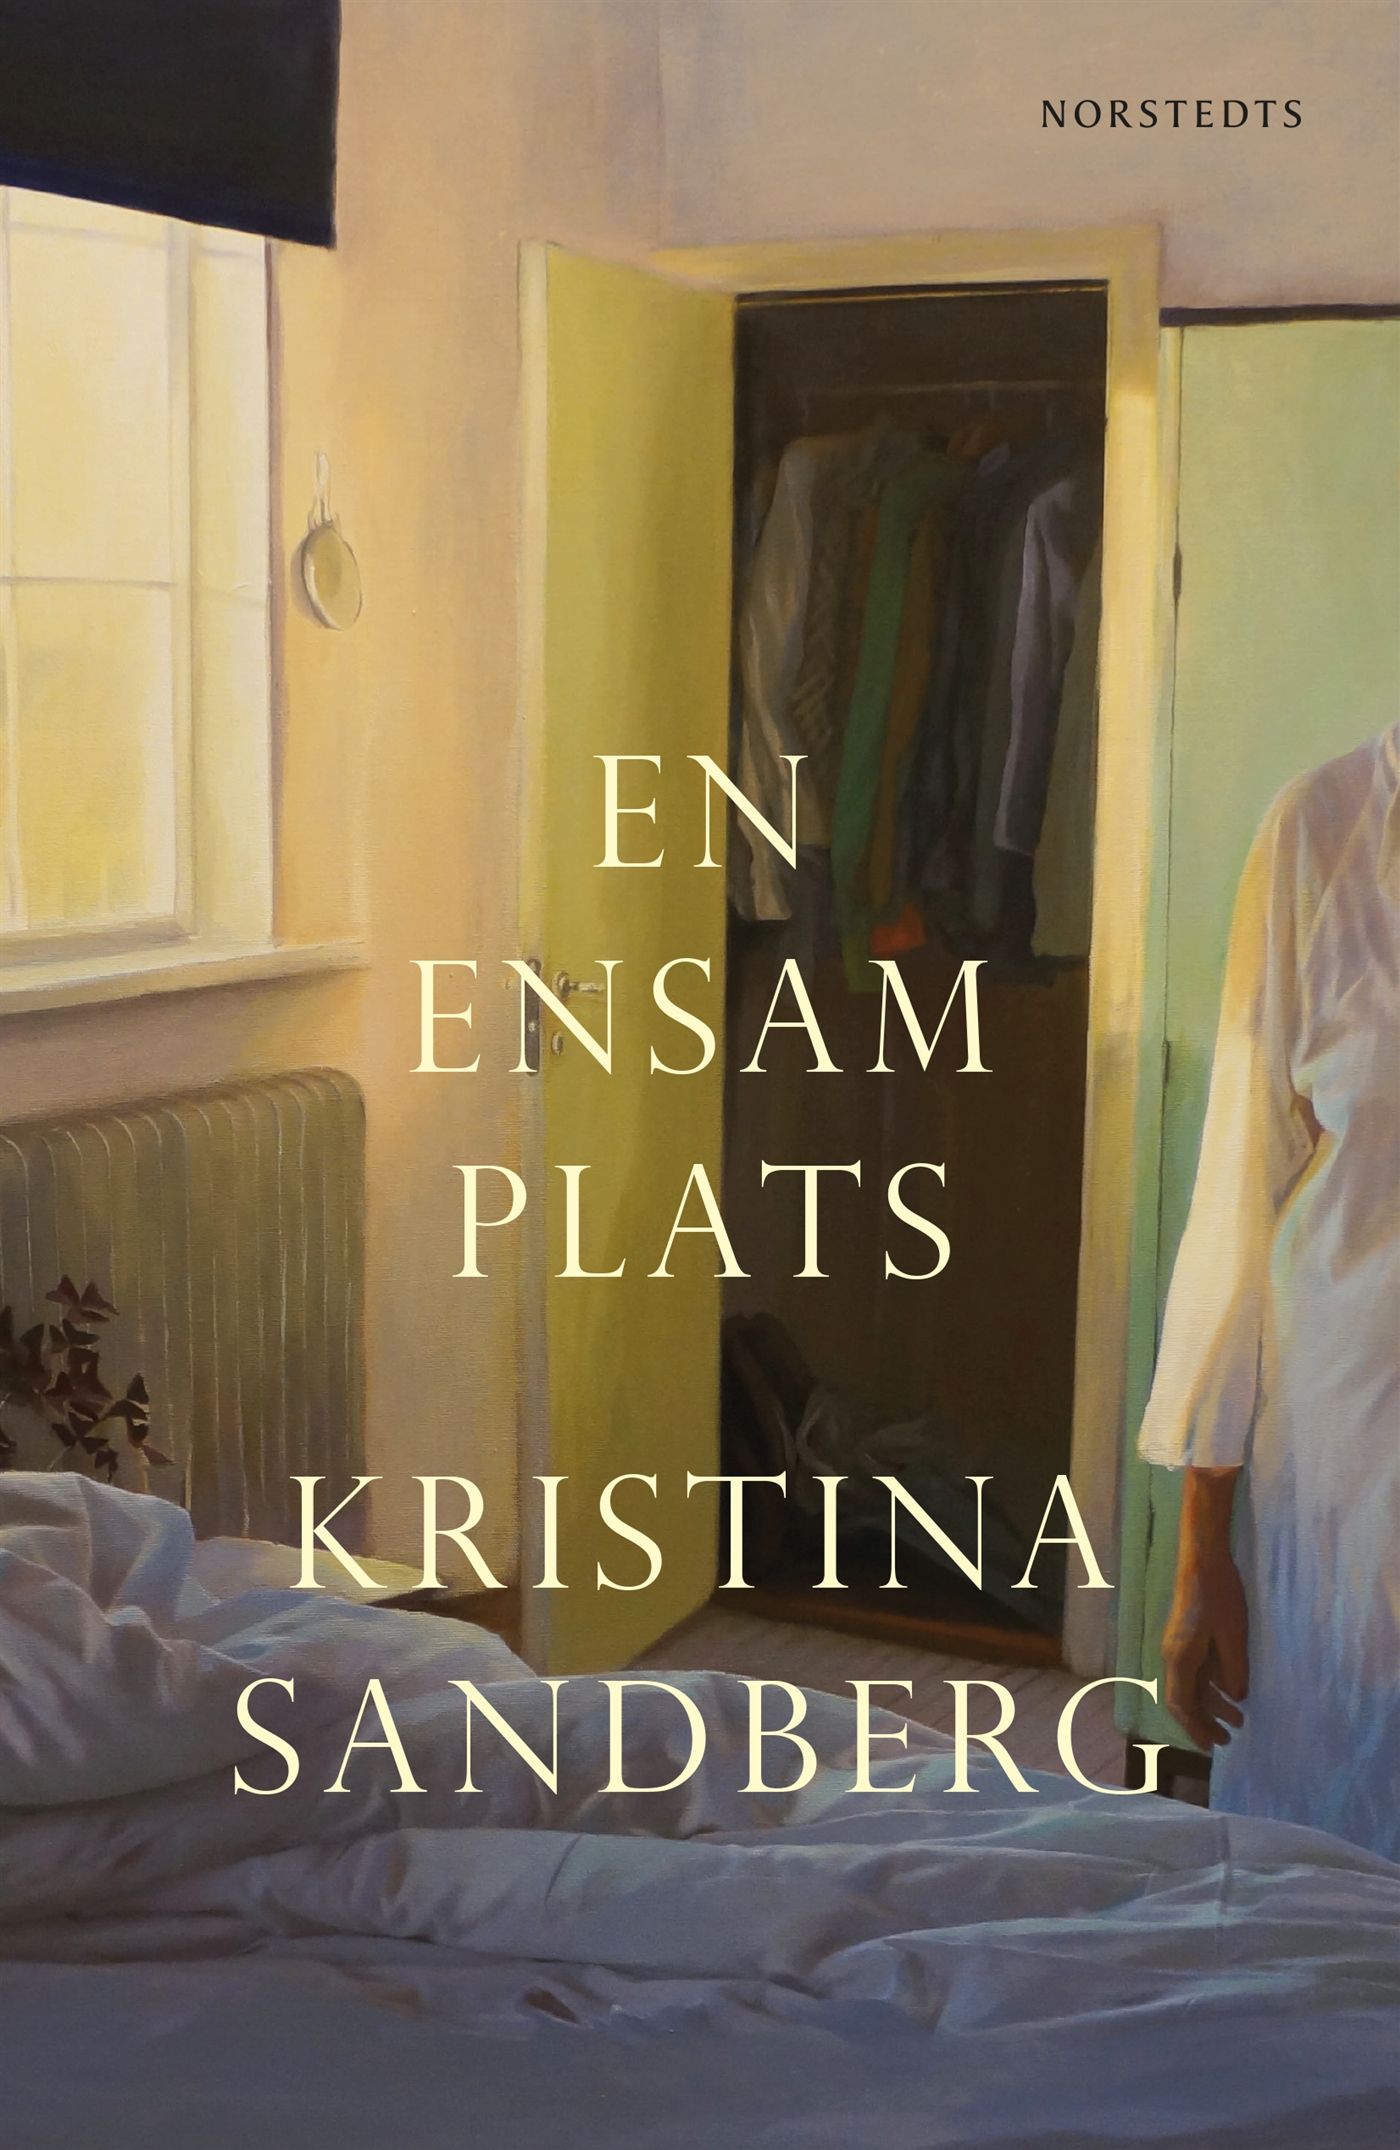 En ensam plats, eBook by Kristina Sandberg